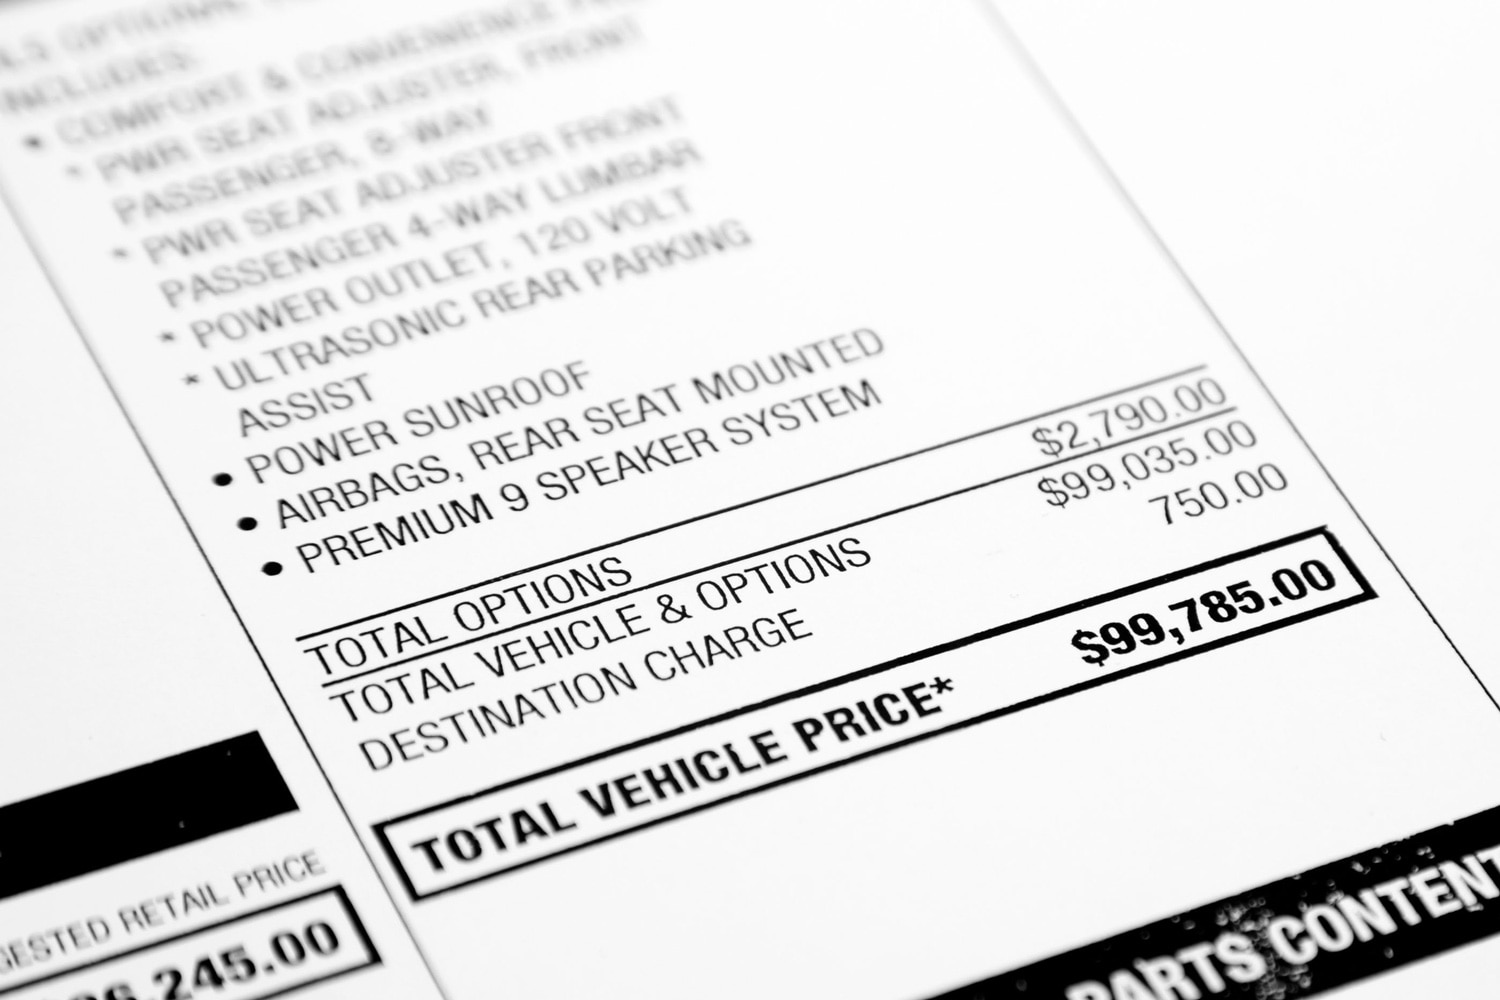 Itemized vehicle sticker price list